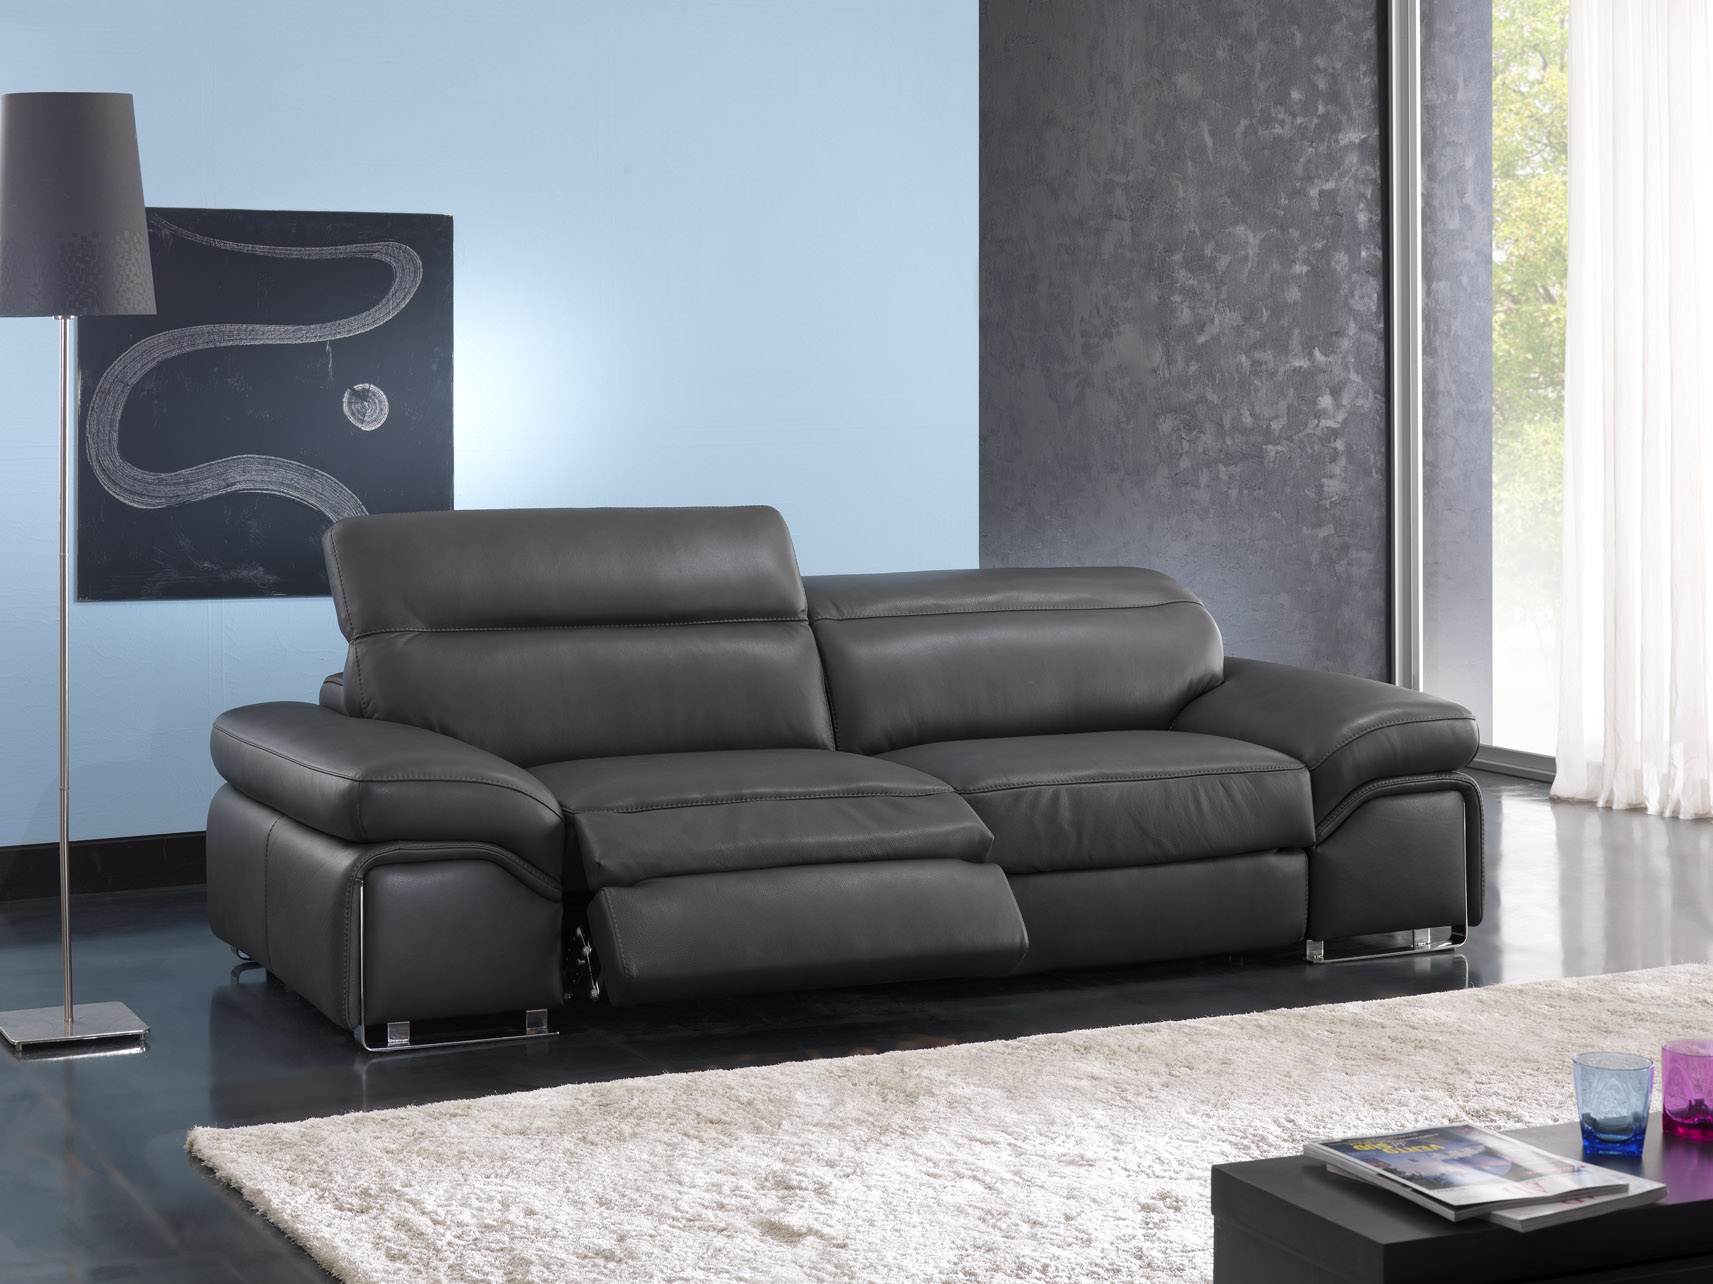 Living Room Furniture Sleepers Sofas Loveseats and Chairs Maifair Living